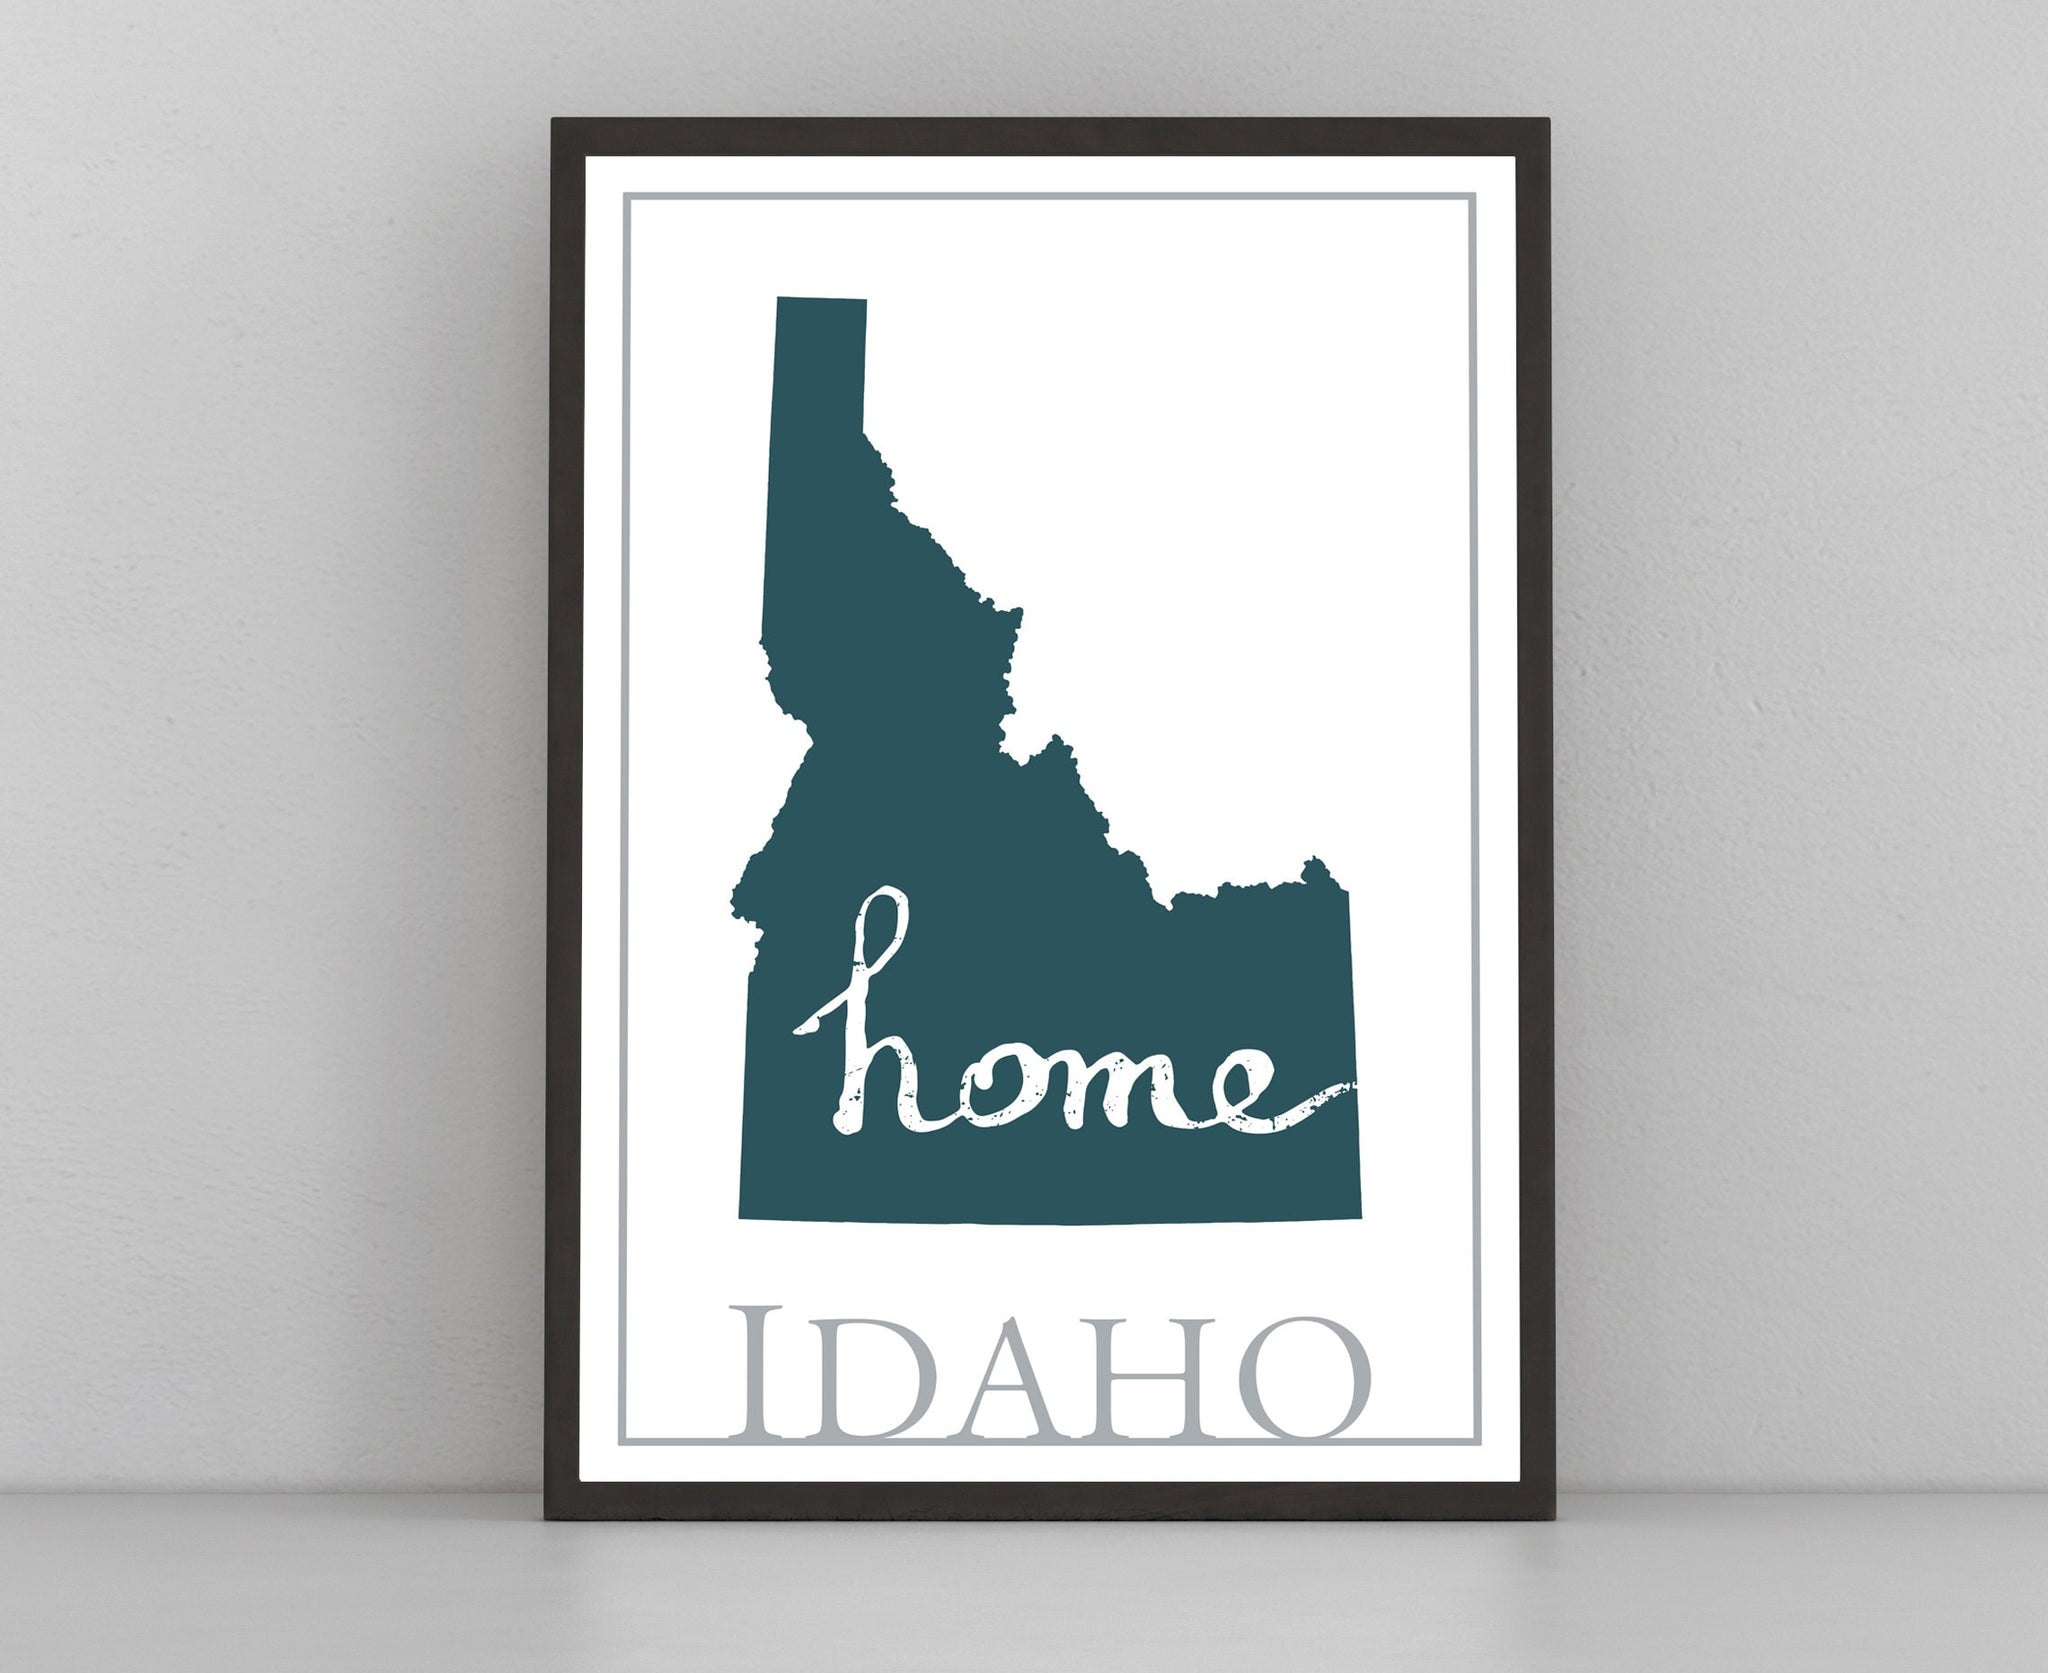 Idaho Map Wall Art, Idaho Modern Map Poster Print, Home Wall Decor, City Map, Idaho City Poster Print, State Posters, Home Office wall decor